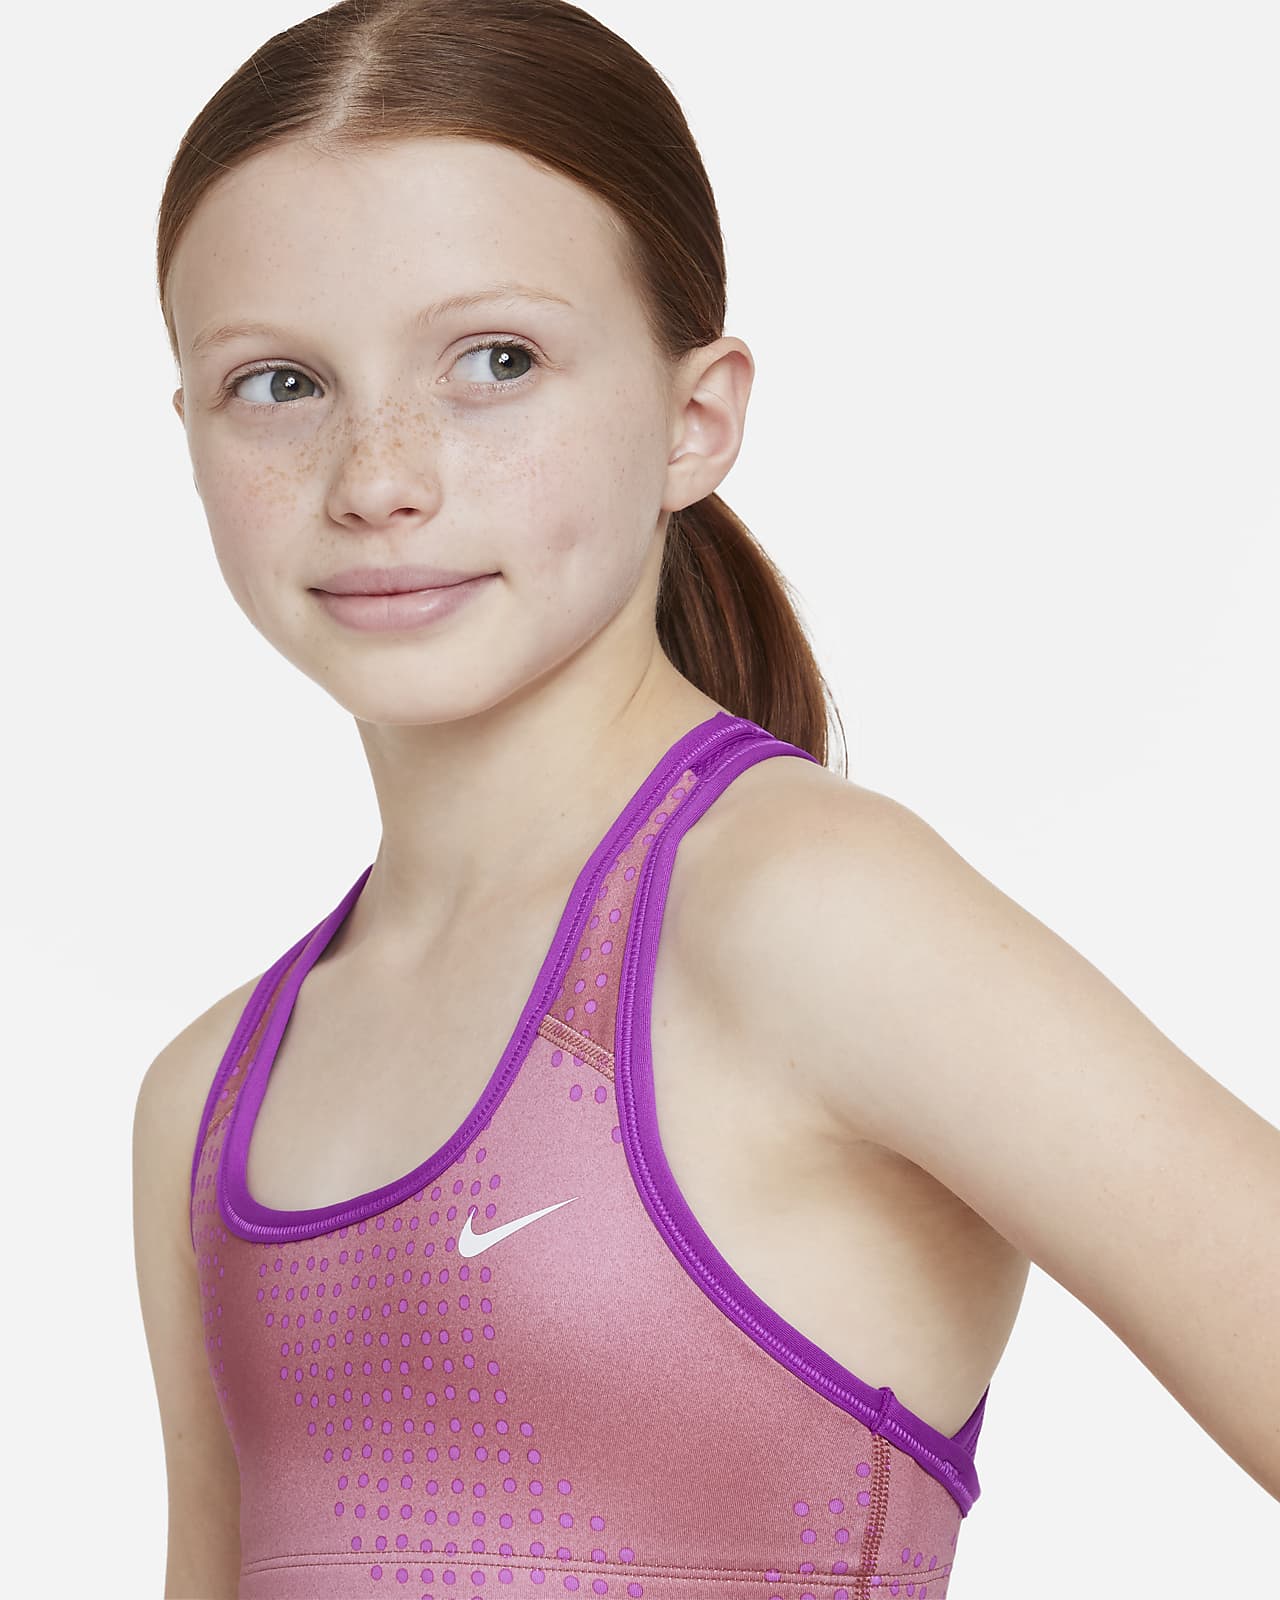 Nike Bra Girls Large Purple Sports Bra Dri-Fit Pro Training Gym Older Kids